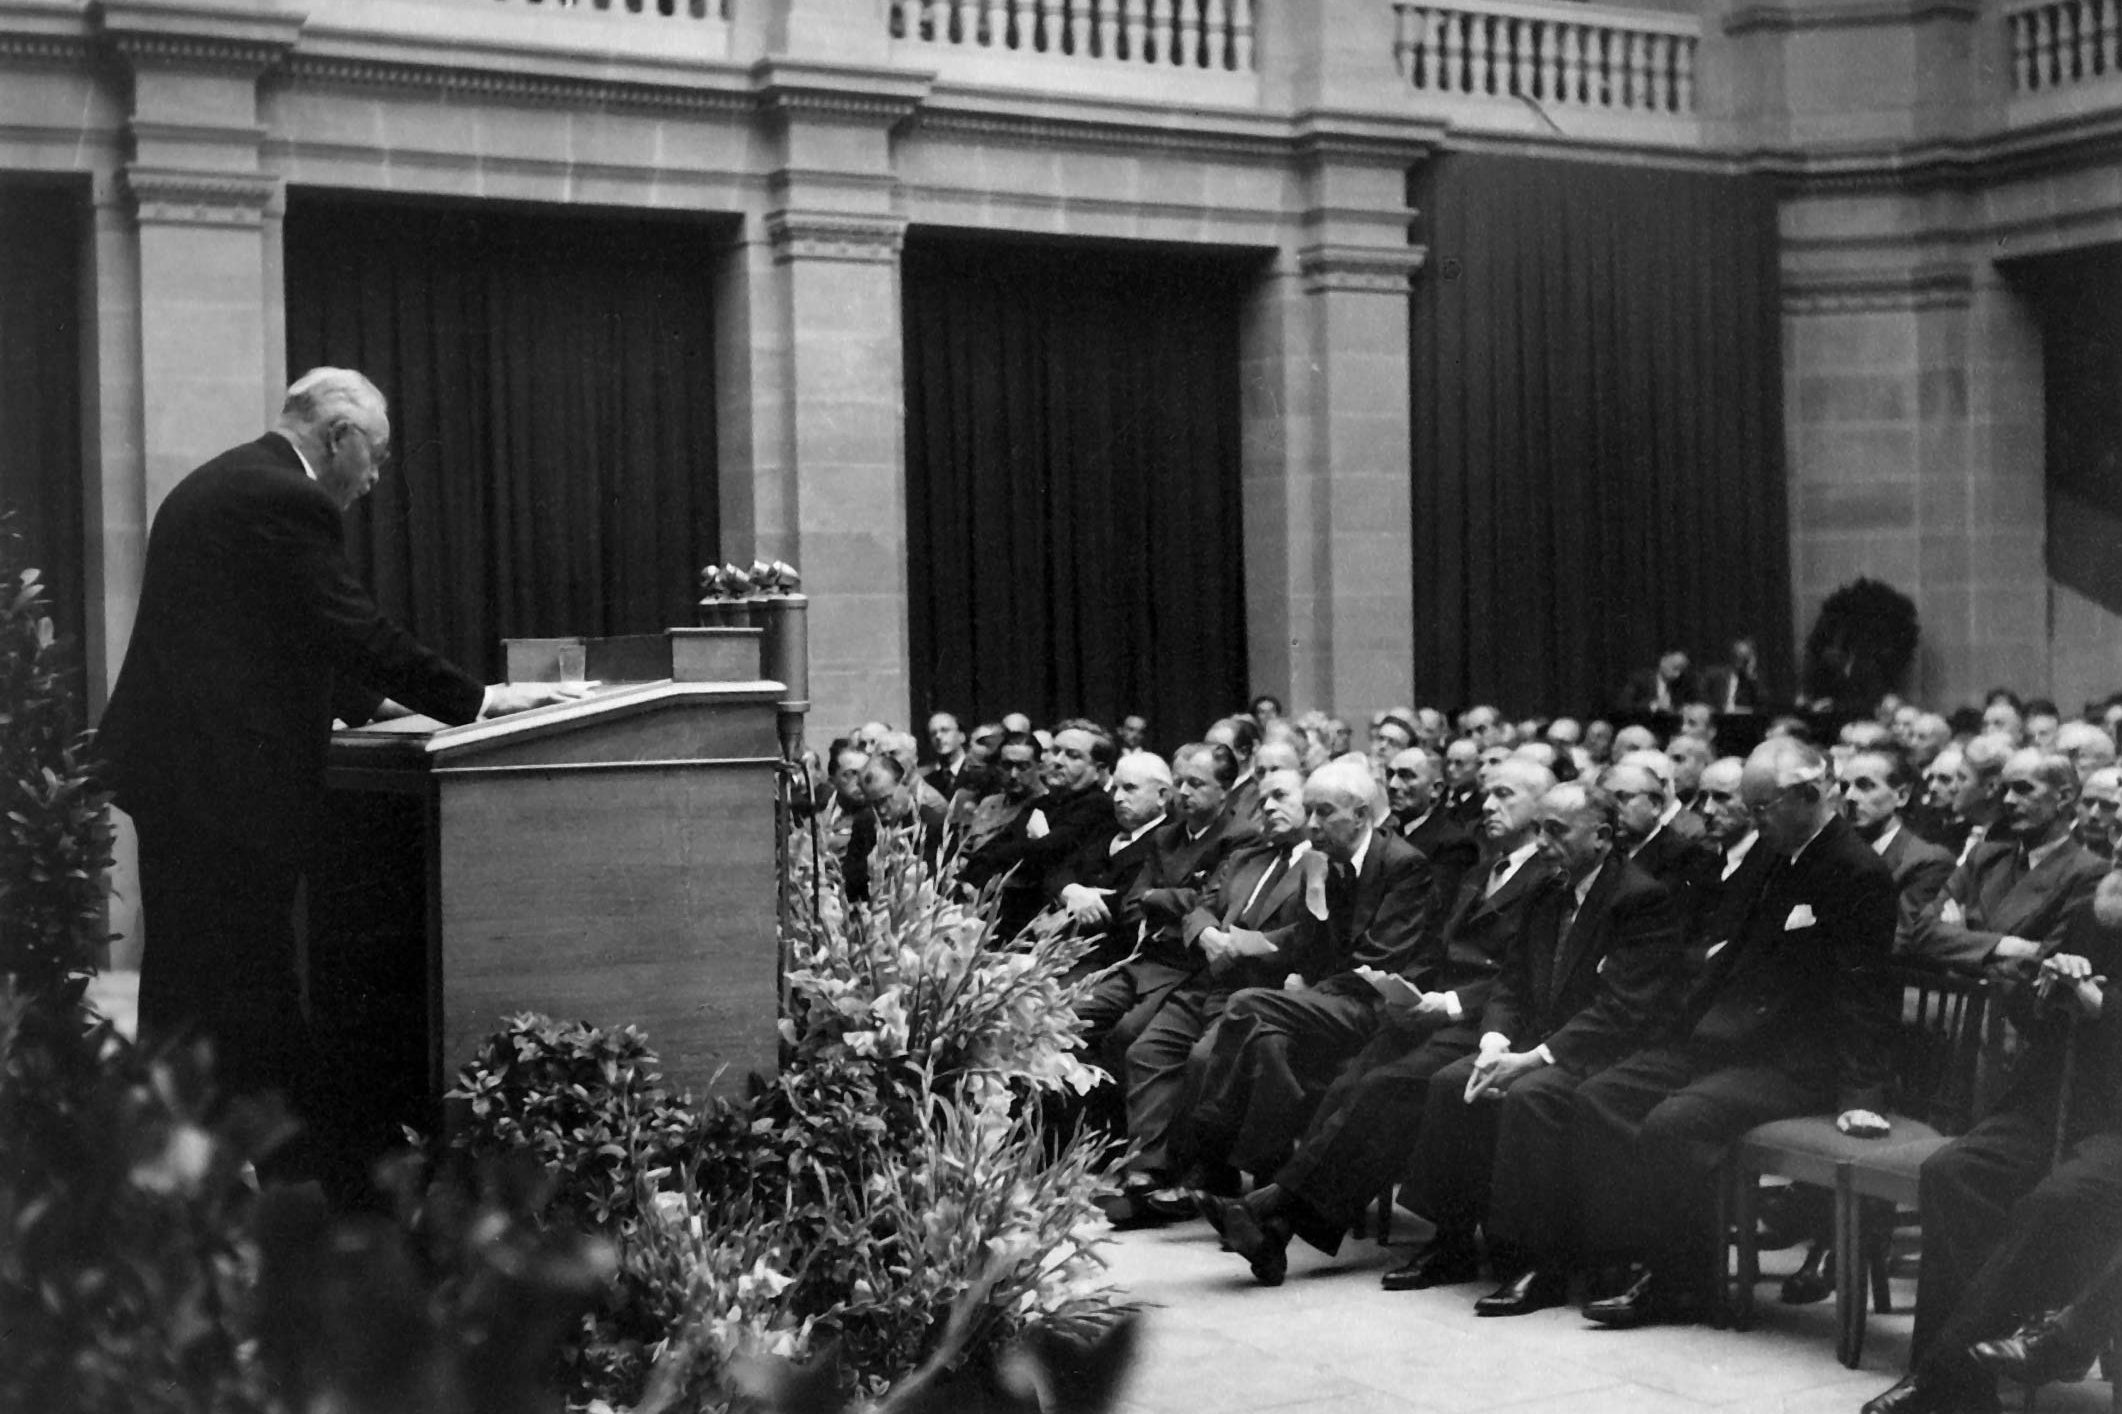 Sitzung des Parlamentarischen Rates im Museum König in Bonn, 01.09.1948 (Quelle: AdsD, 6/FOTA035369; Rechte: AdsD)